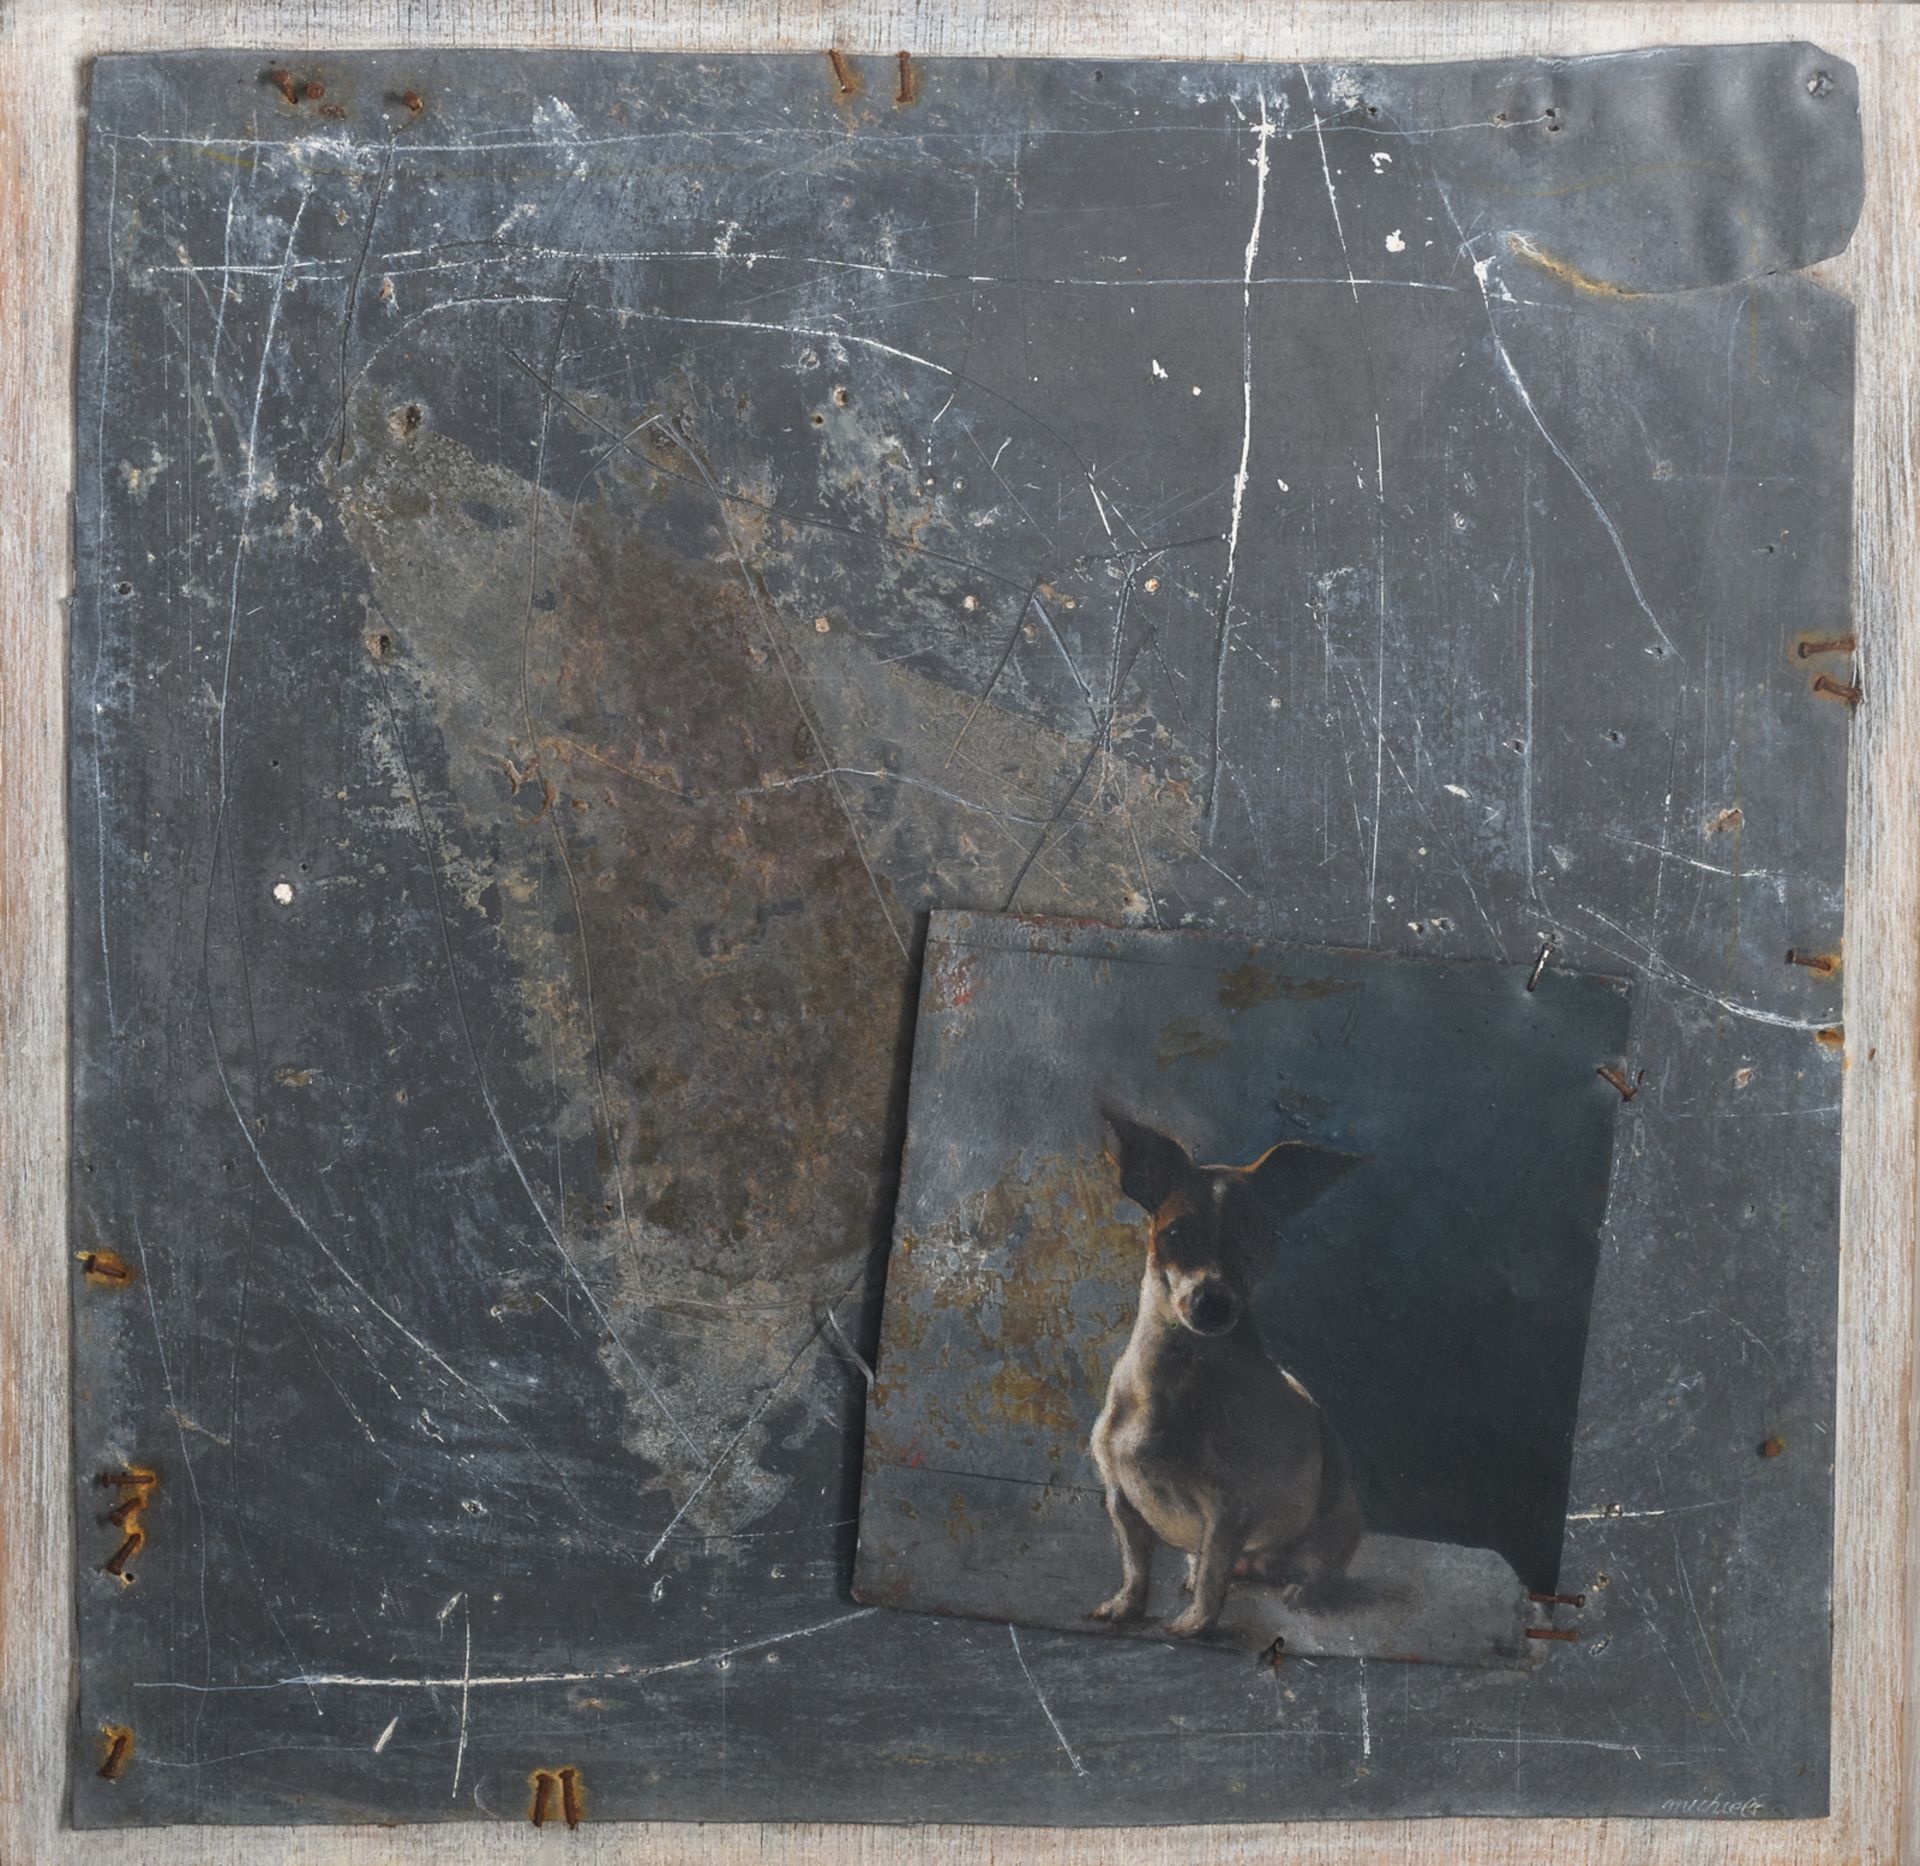 Michiels D., 'Tache', oil on zinc, dated 1998, in a plexi box, 36 x 36 cm